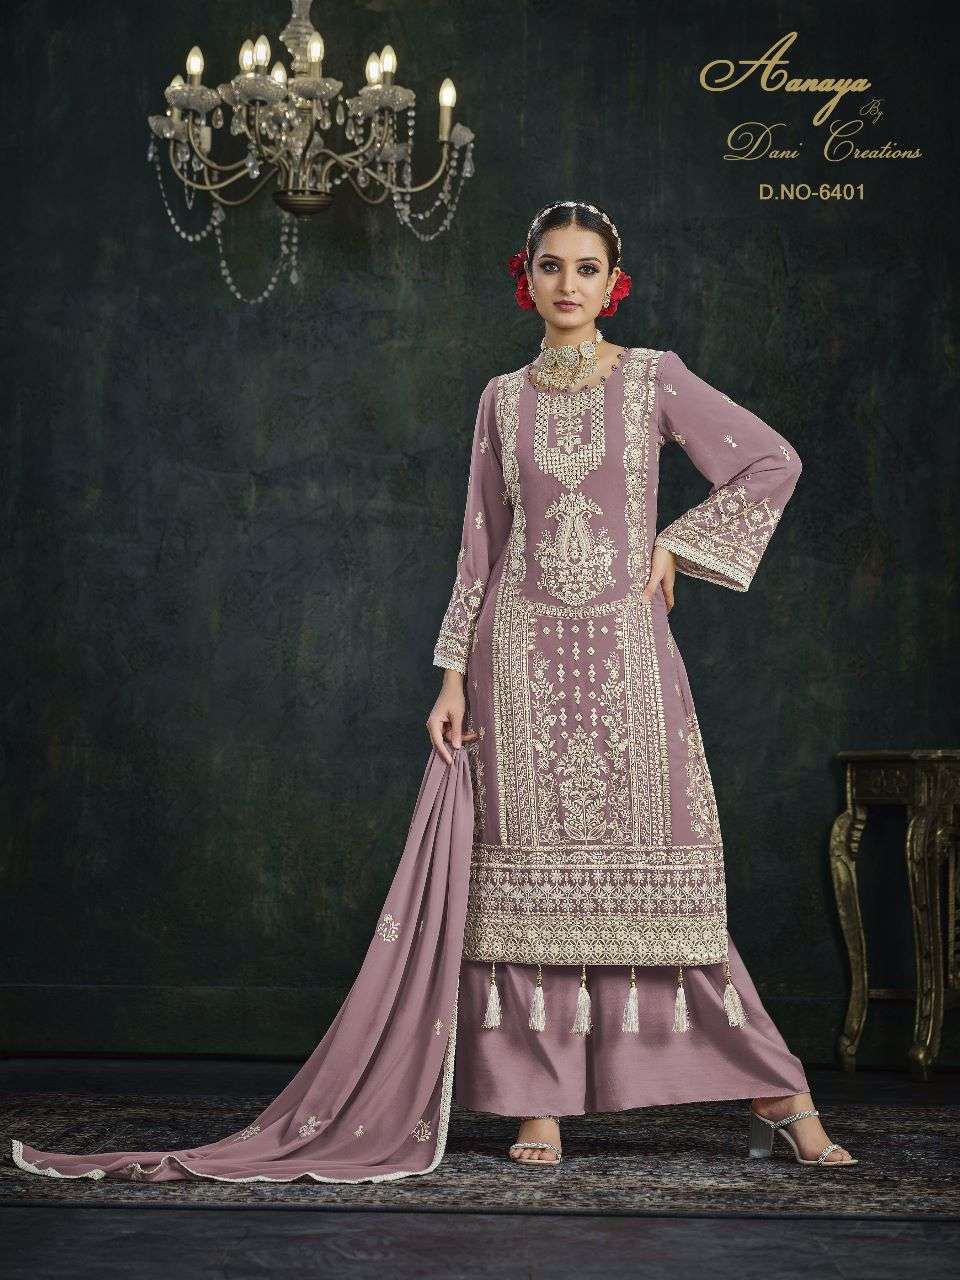 dani creation aanaya vol 164 designer traditonal party wear dresses collection